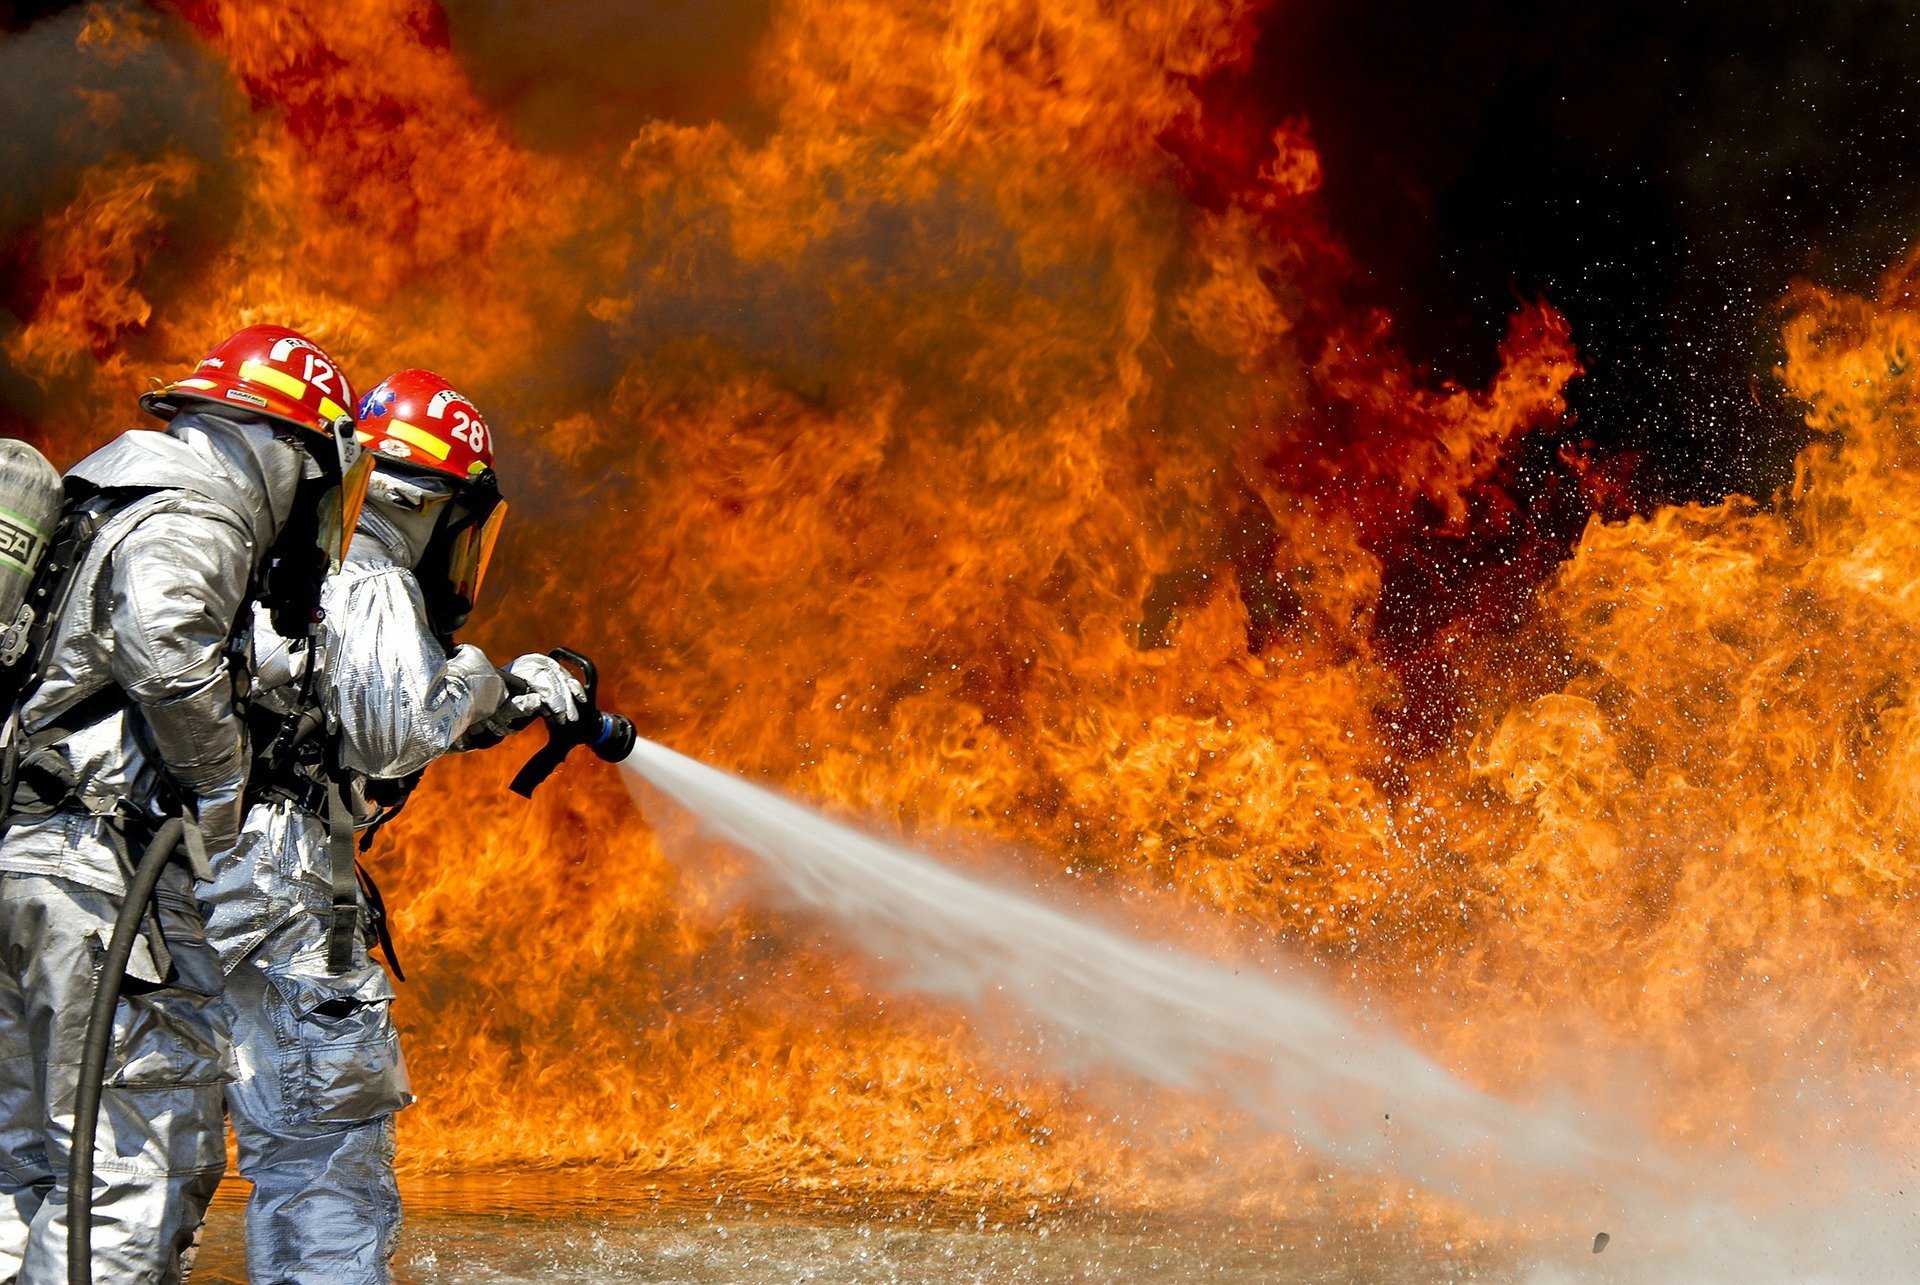 Firefighters extinguish fire | Photo: Pixabay